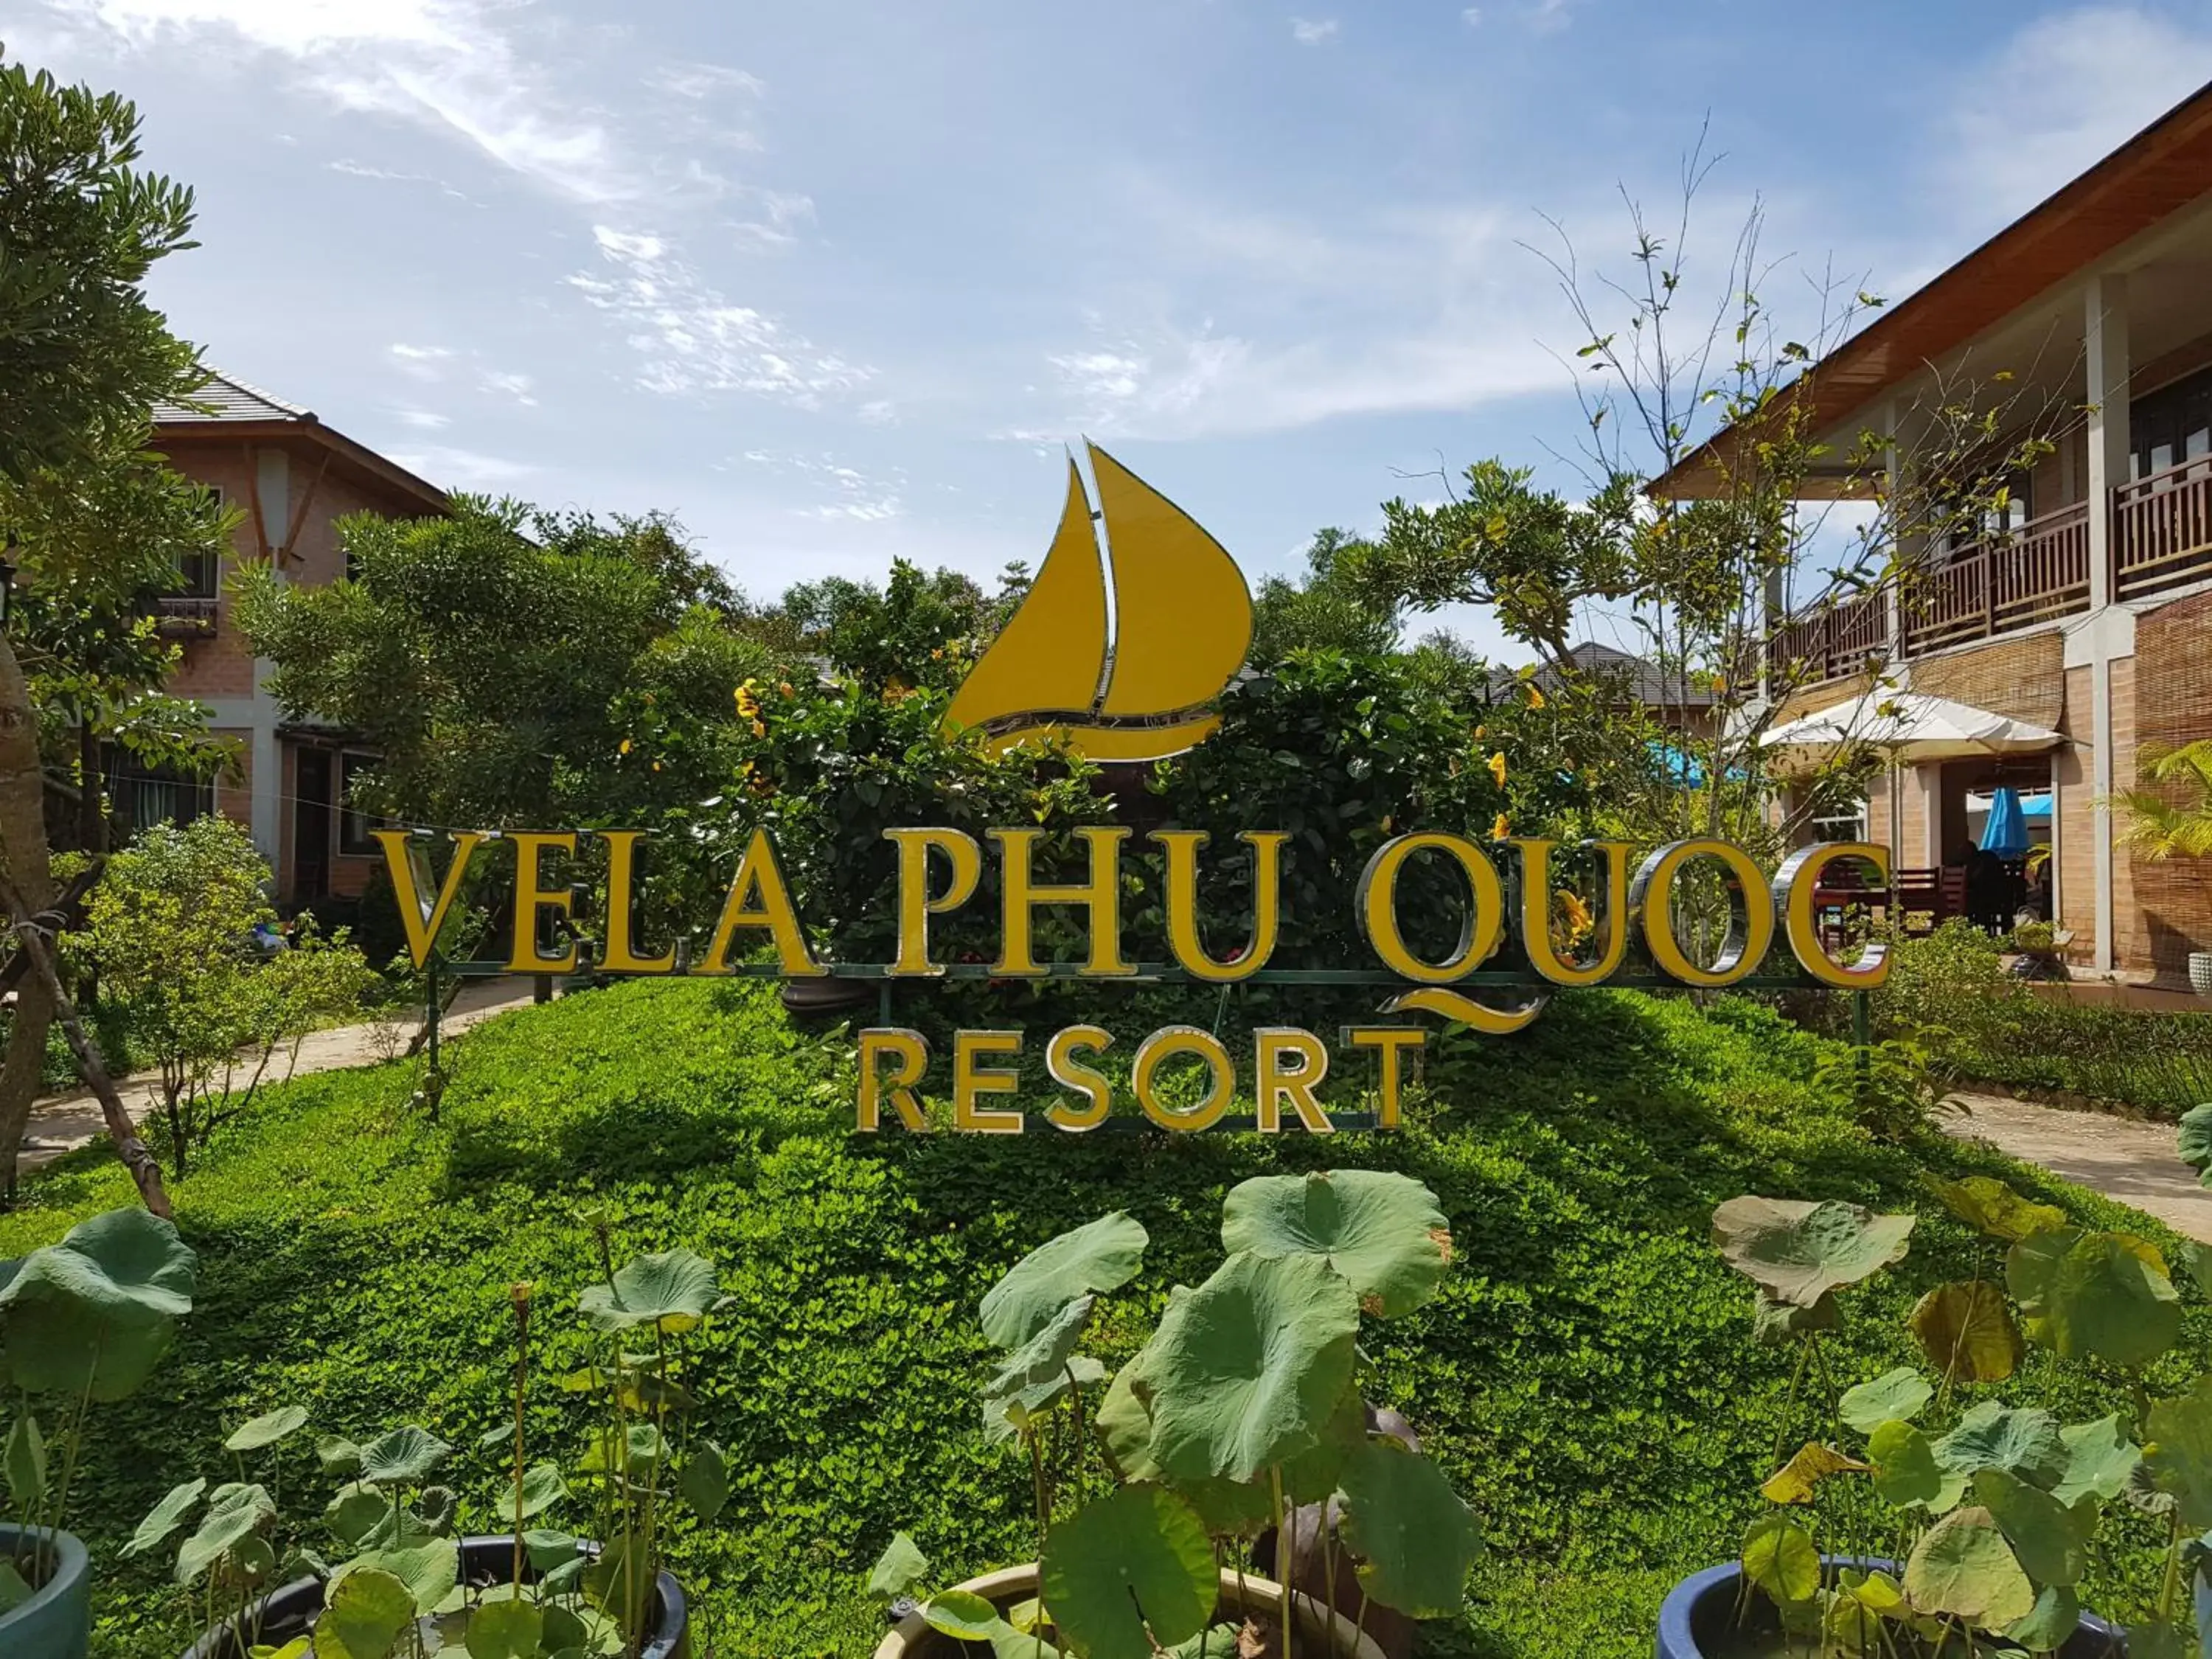 Property logo or sign in Vela Phu Quoc Resort